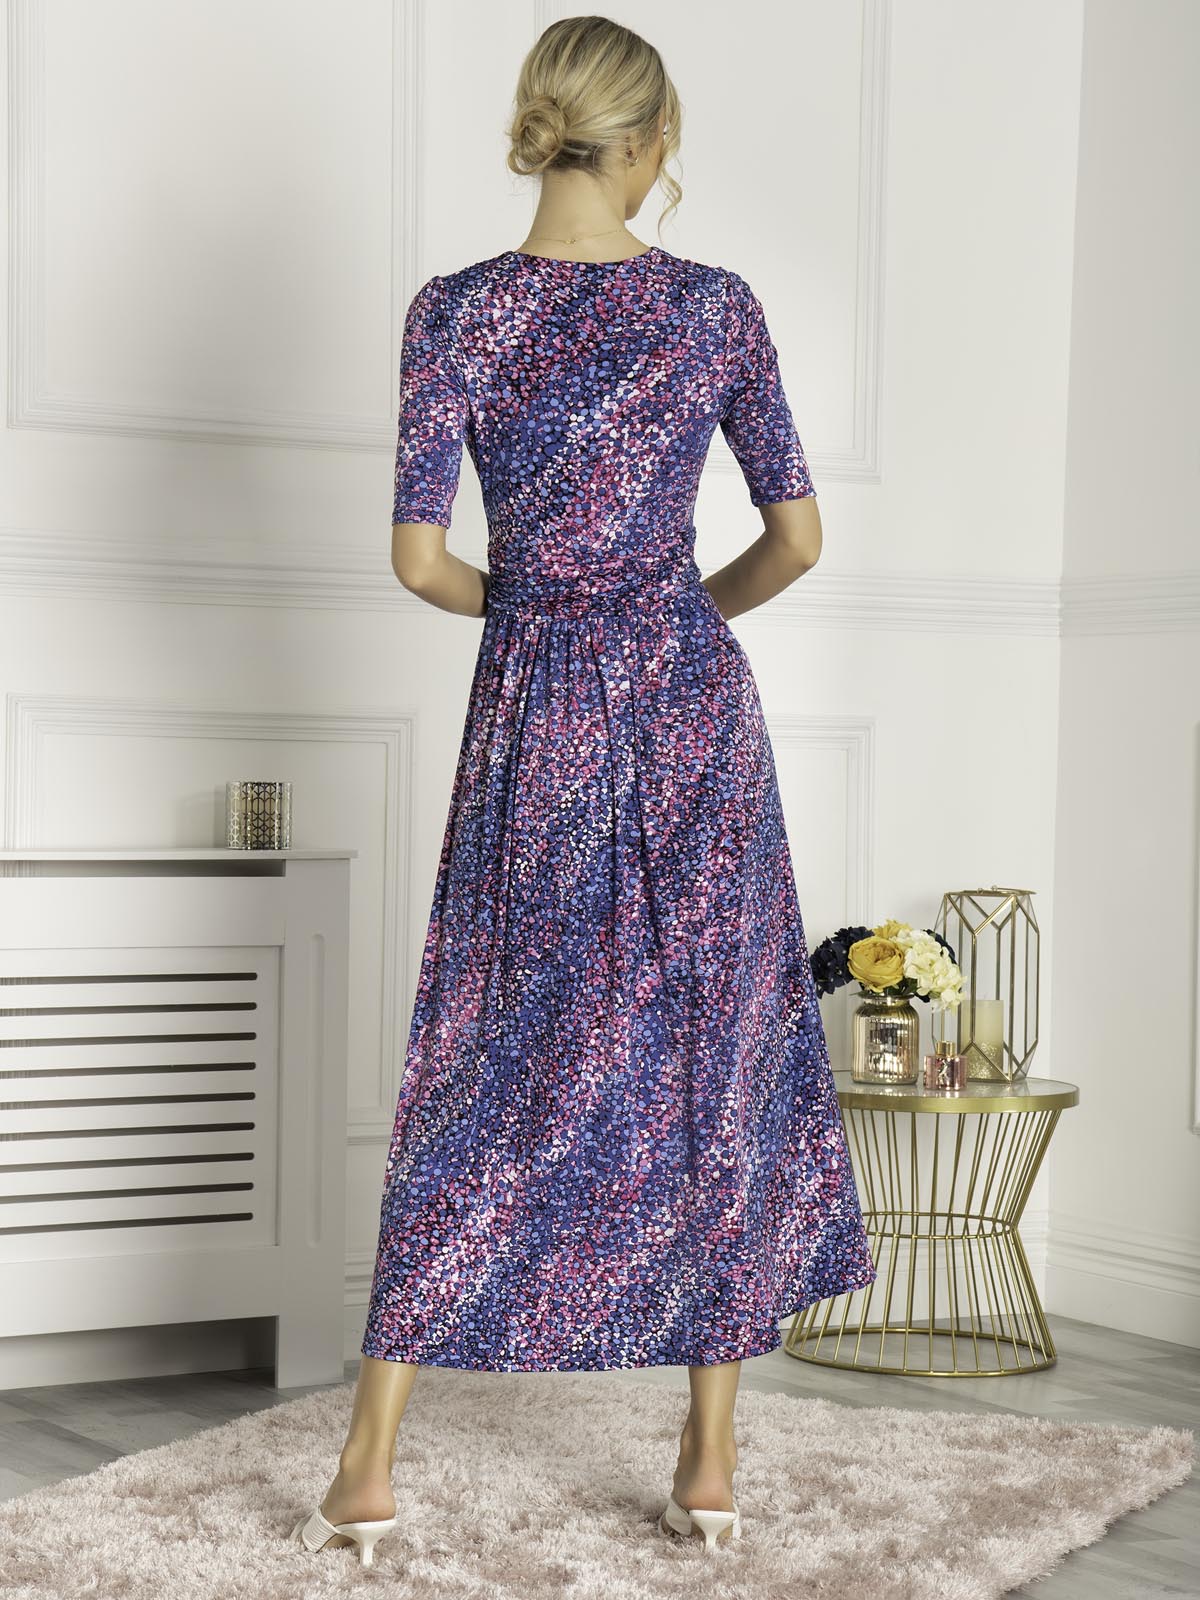 Josie Animal Print Maxi Dress, Blue Multi